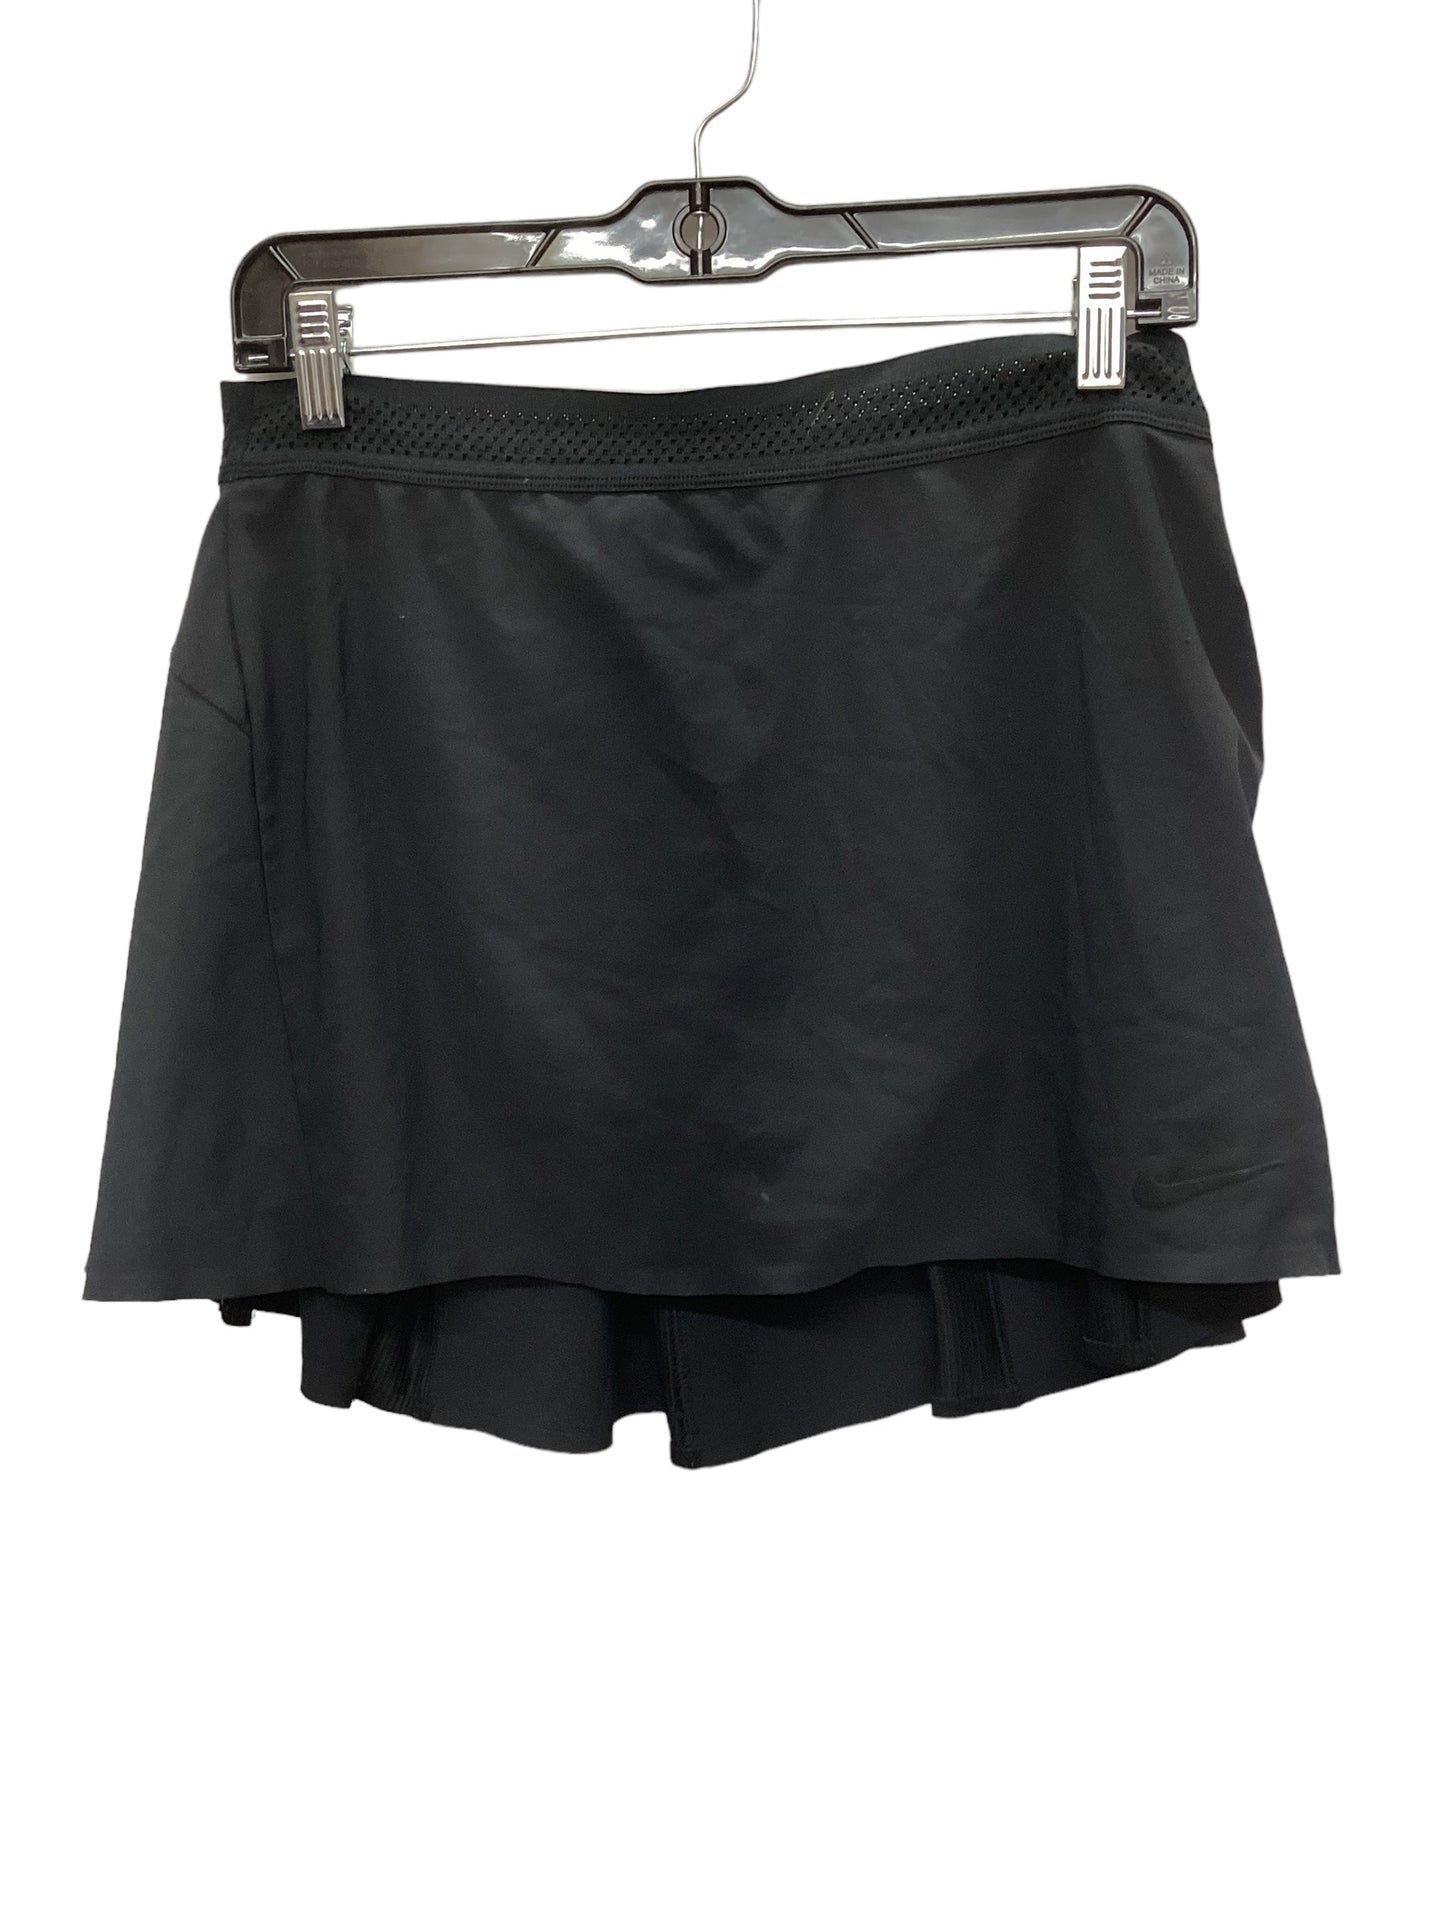 Black Athletic Skirt Nike Apparel, Size M